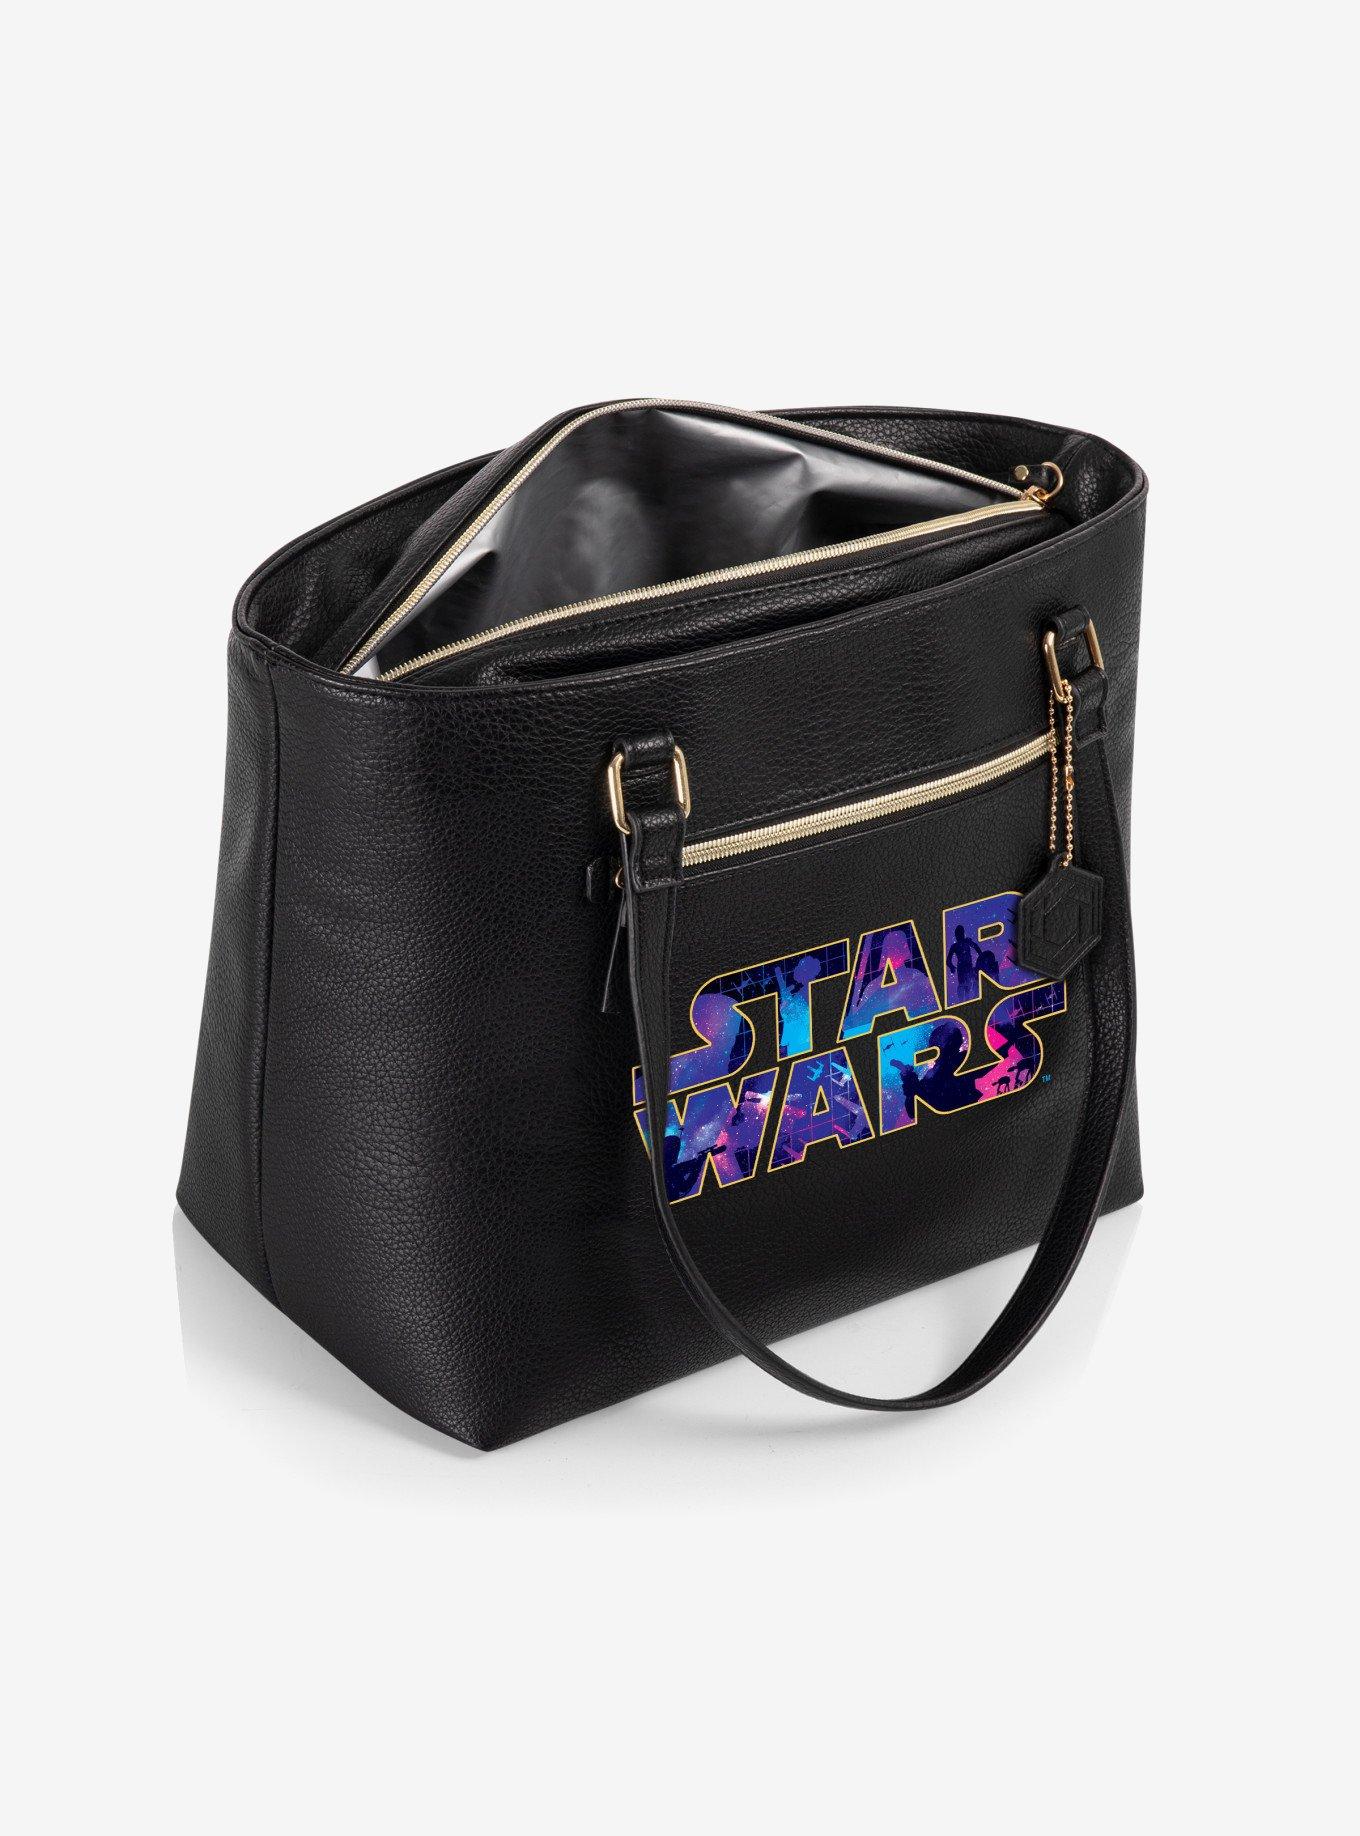 Star Wars Uptown Cooler Tote Bag